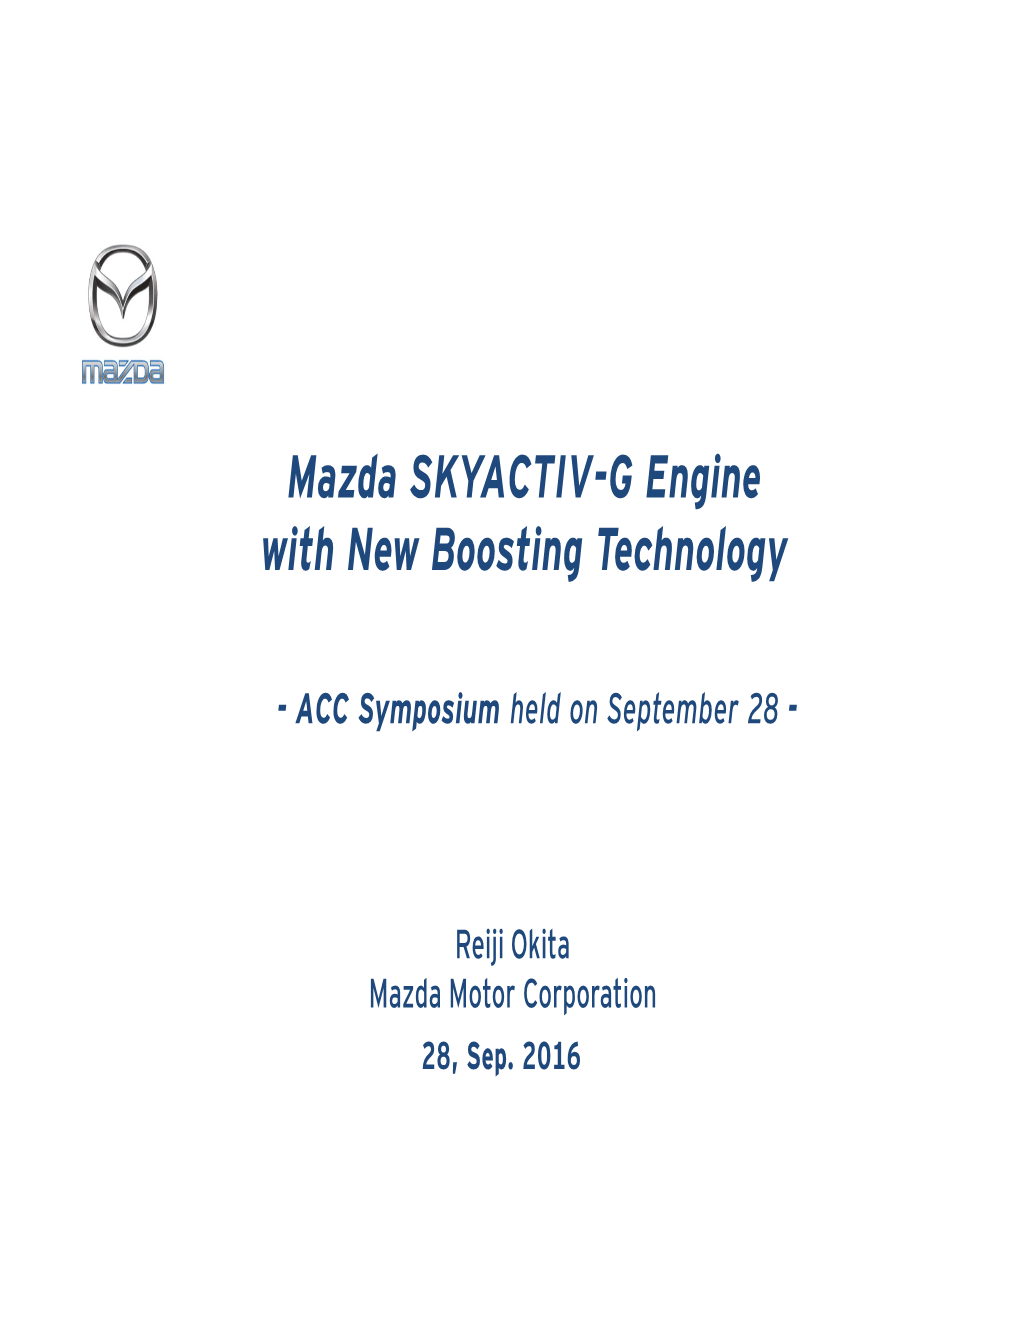 Mazda SKYACTIV-G Engine with New Boosting Technology